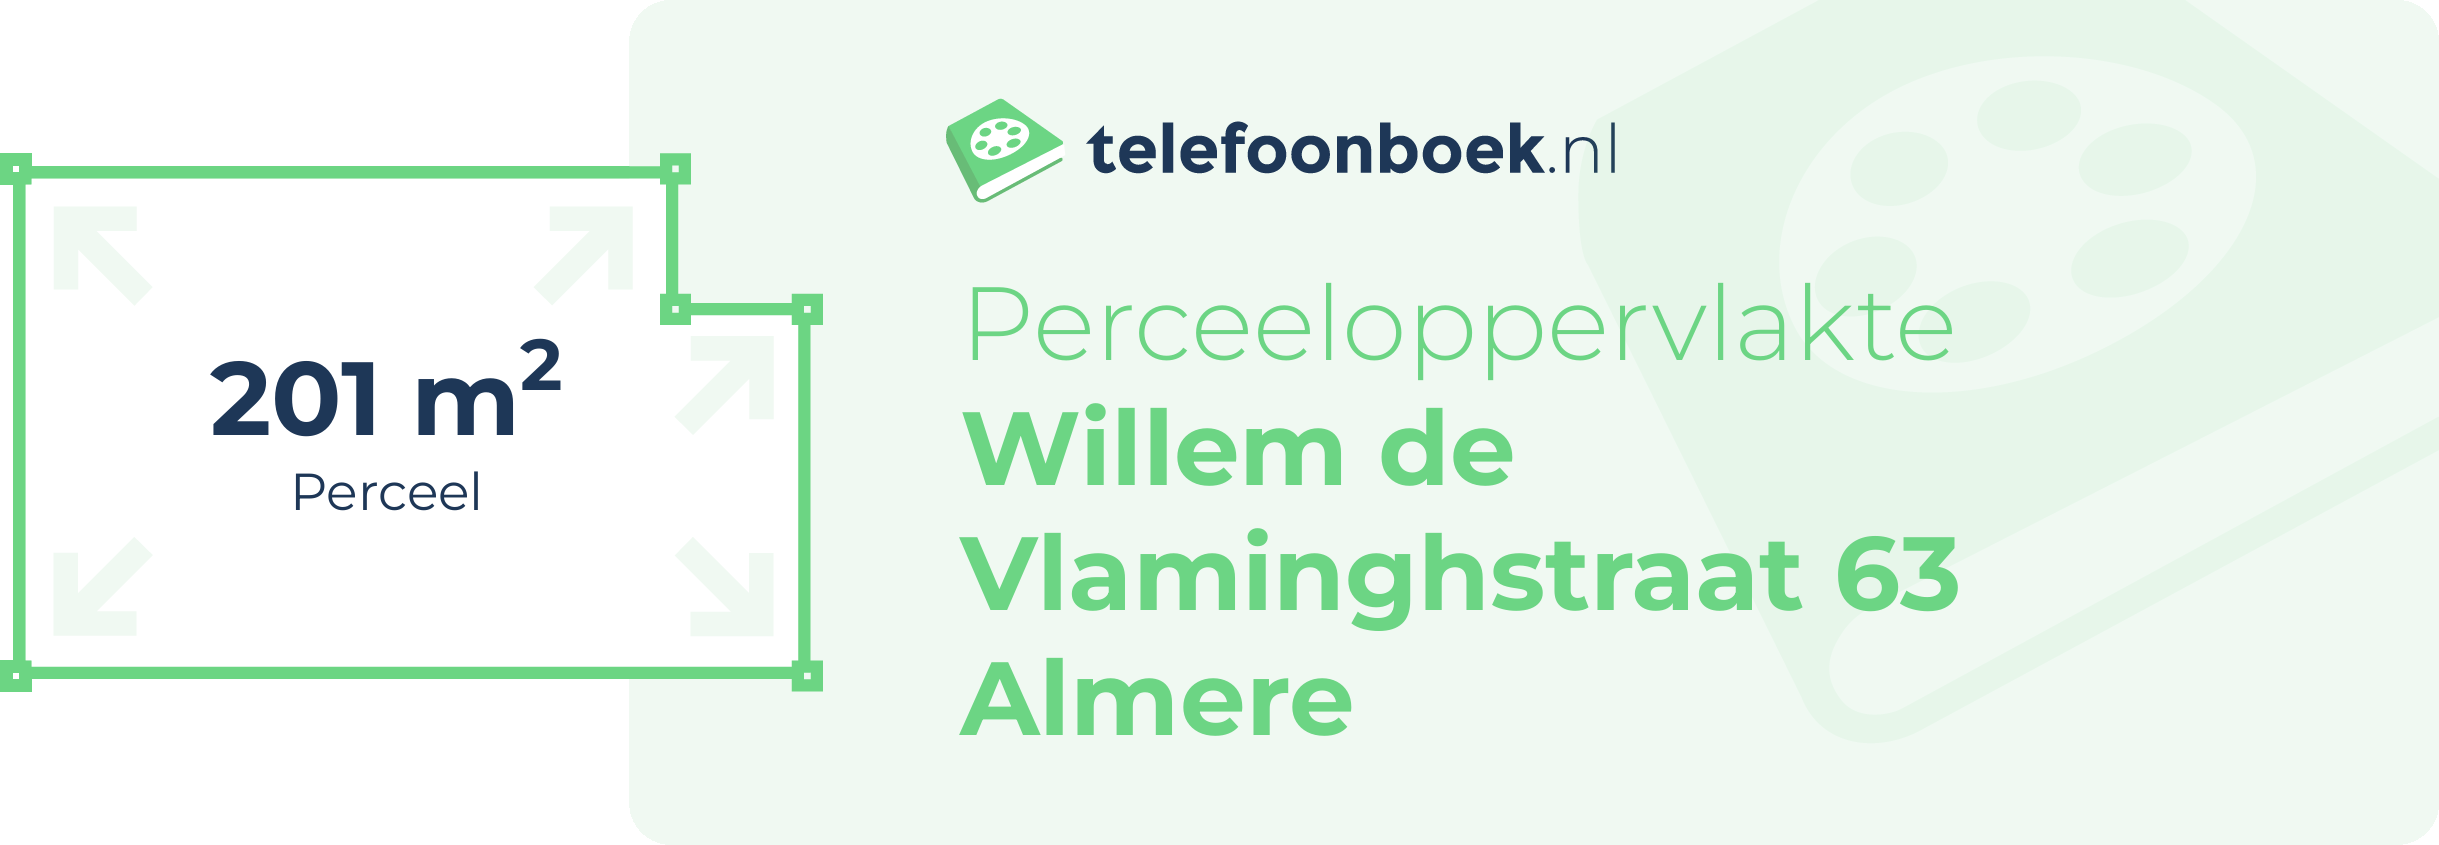 Perceeloppervlakte Willem De Vlaminghstraat 63 Almere